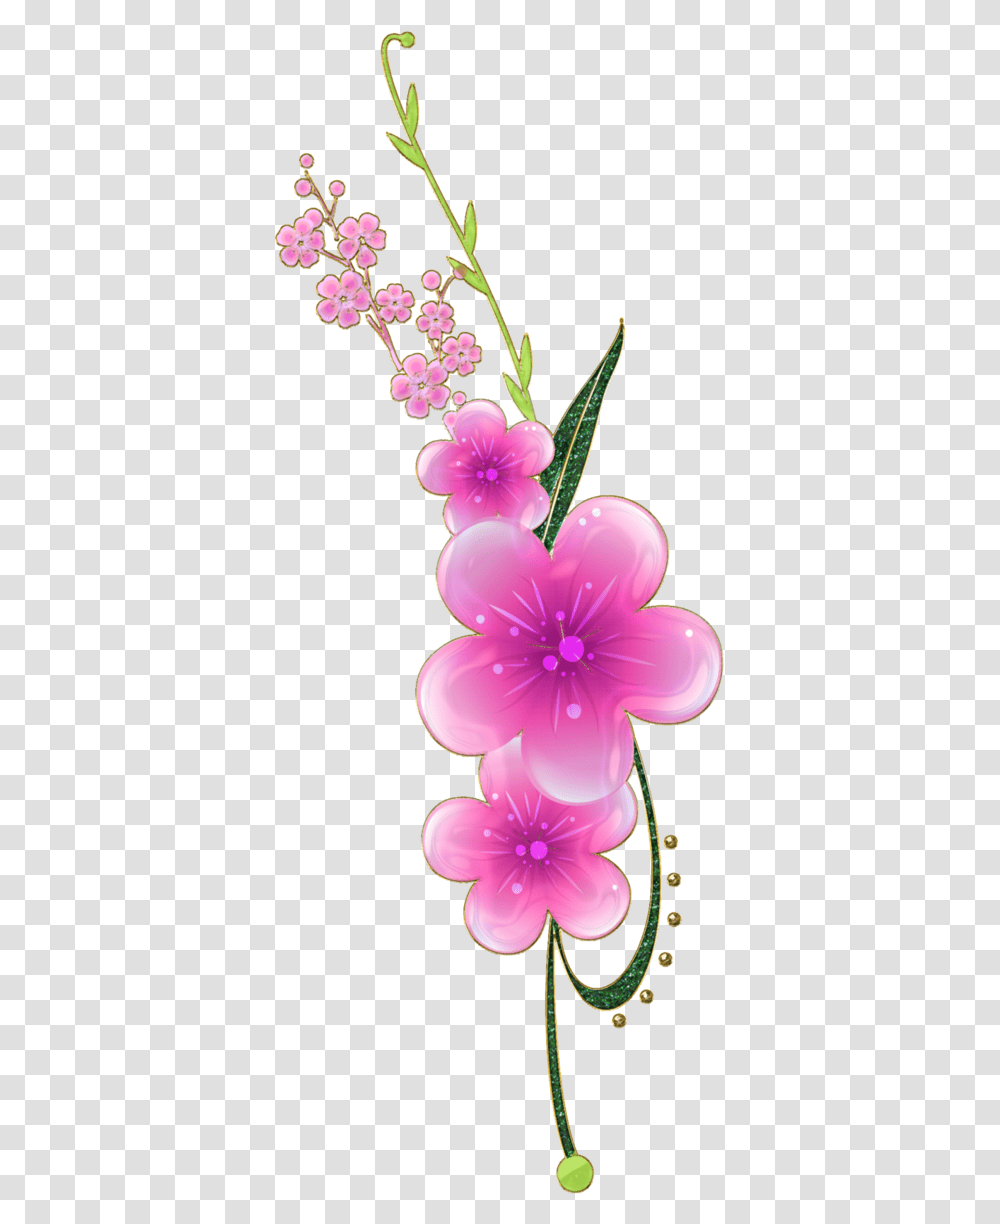 Sweet Pink Flowers Flor De Melissa Desenho, Plant, Petal, Purple, Anther Transparent Png